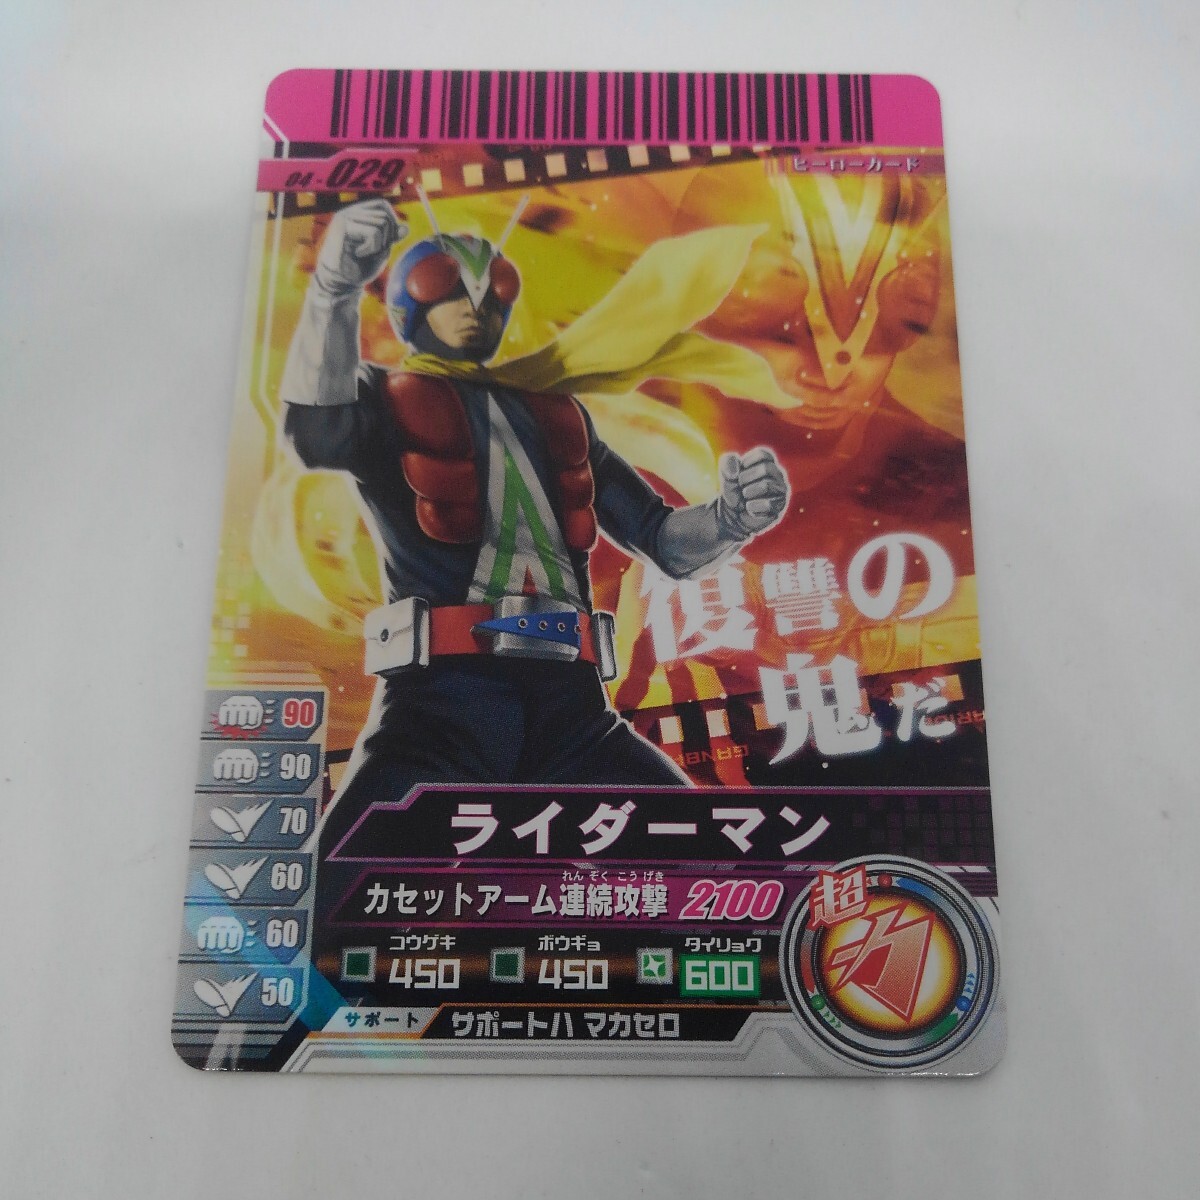  Ganbaride Kamen Rider man 04-029